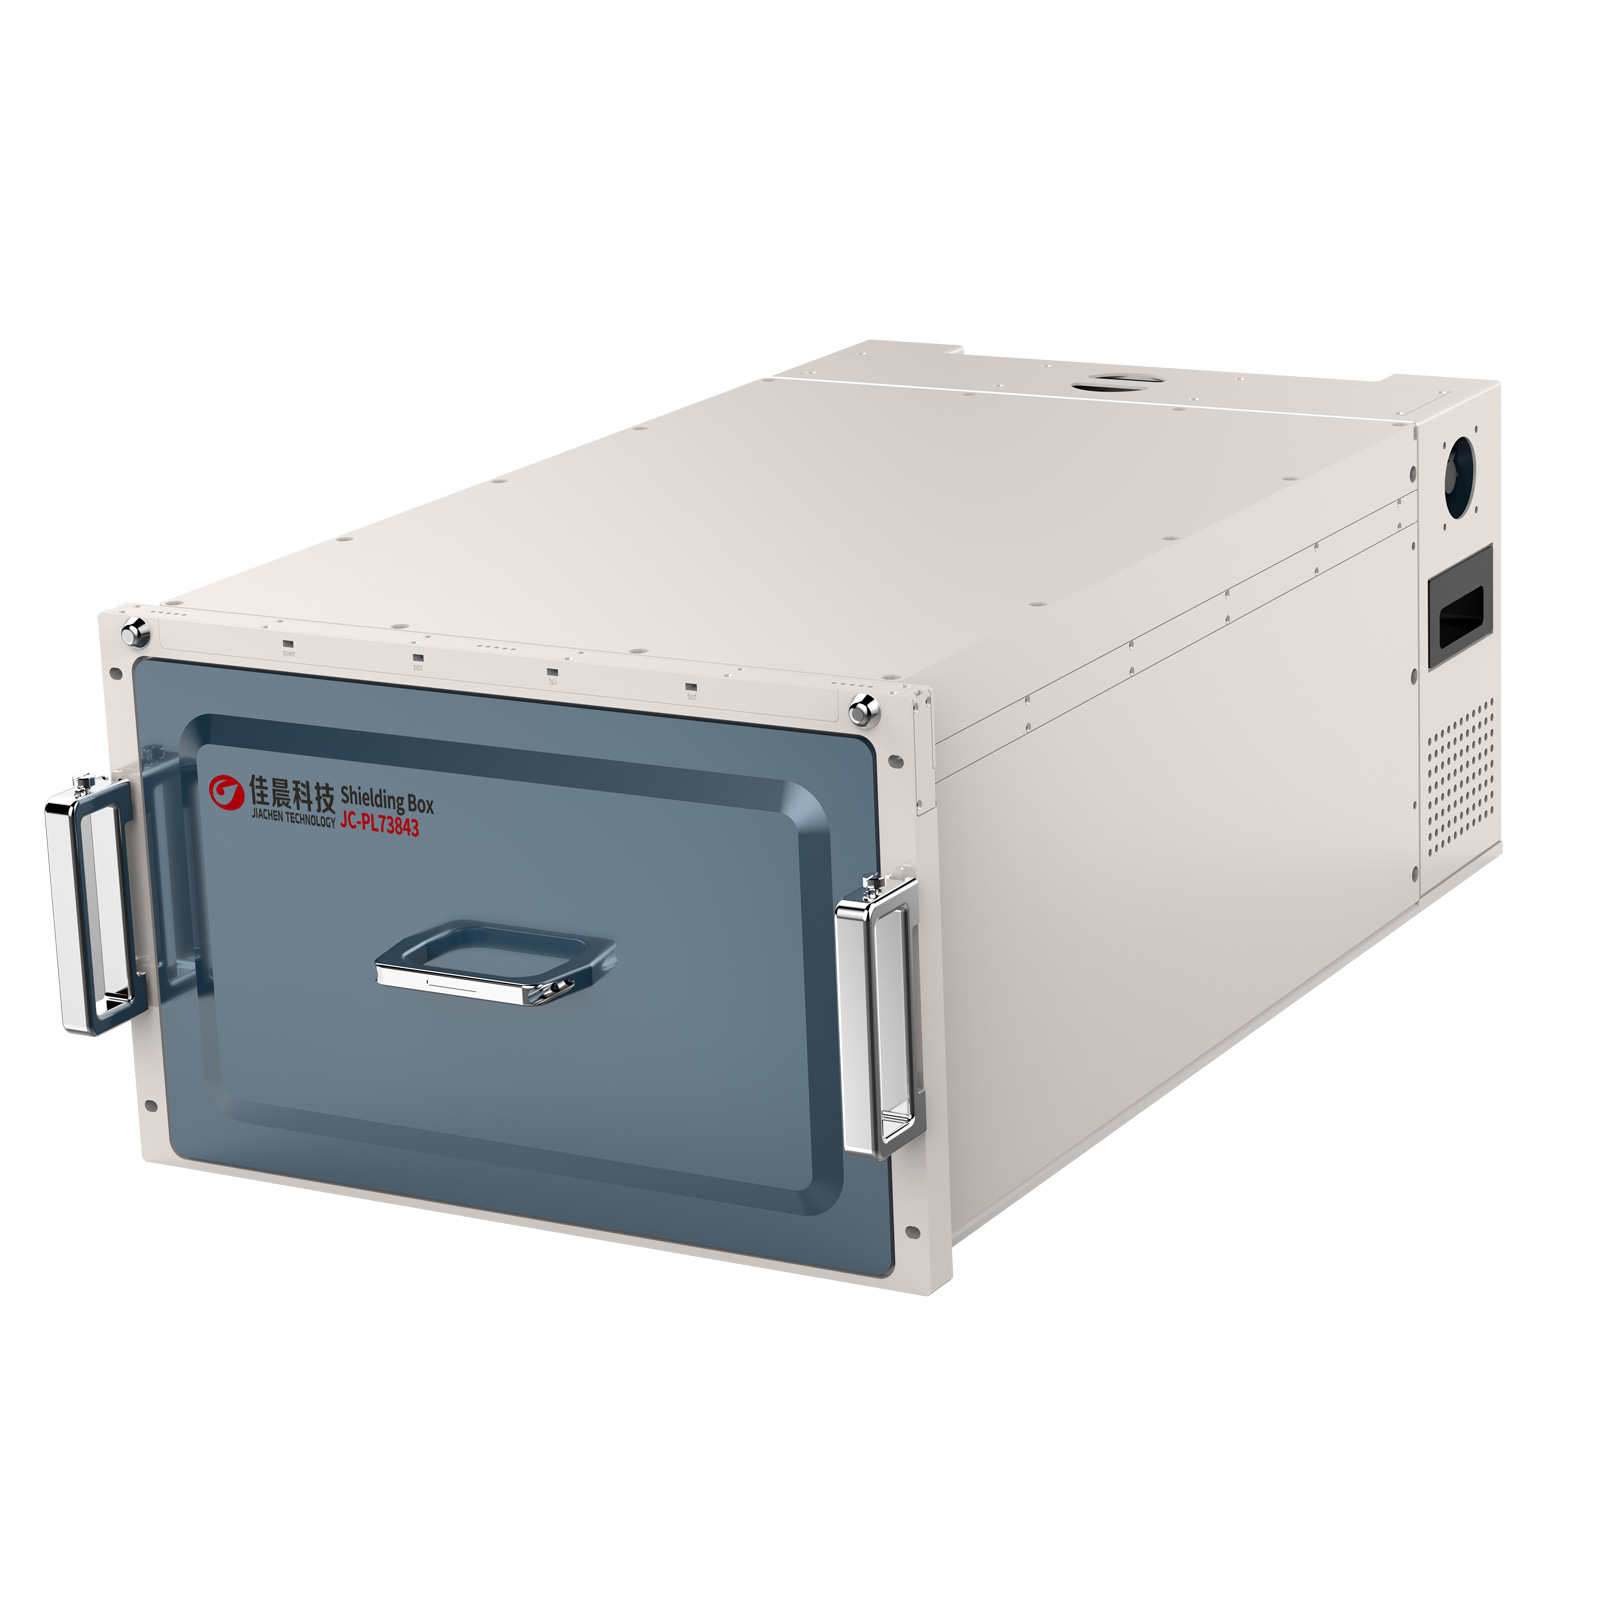 CQL3412 manual drawer type automatic shielding box